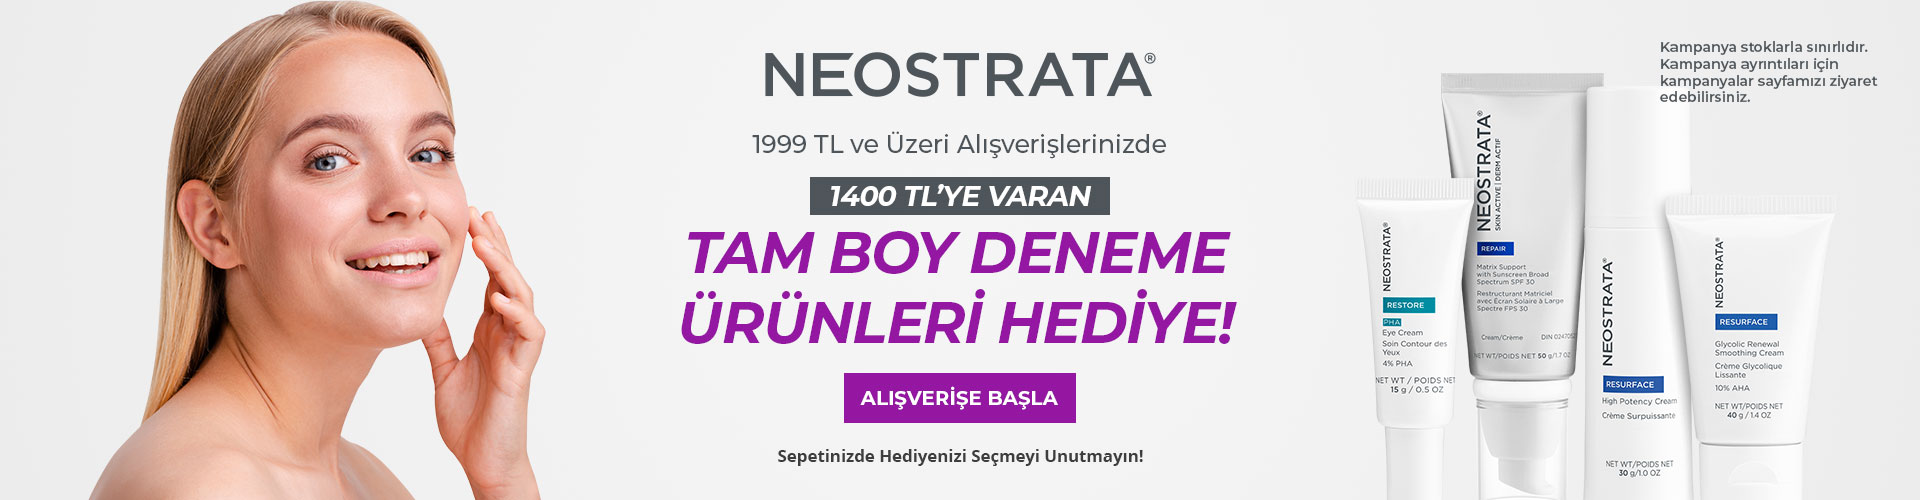 neostrata-kampanya